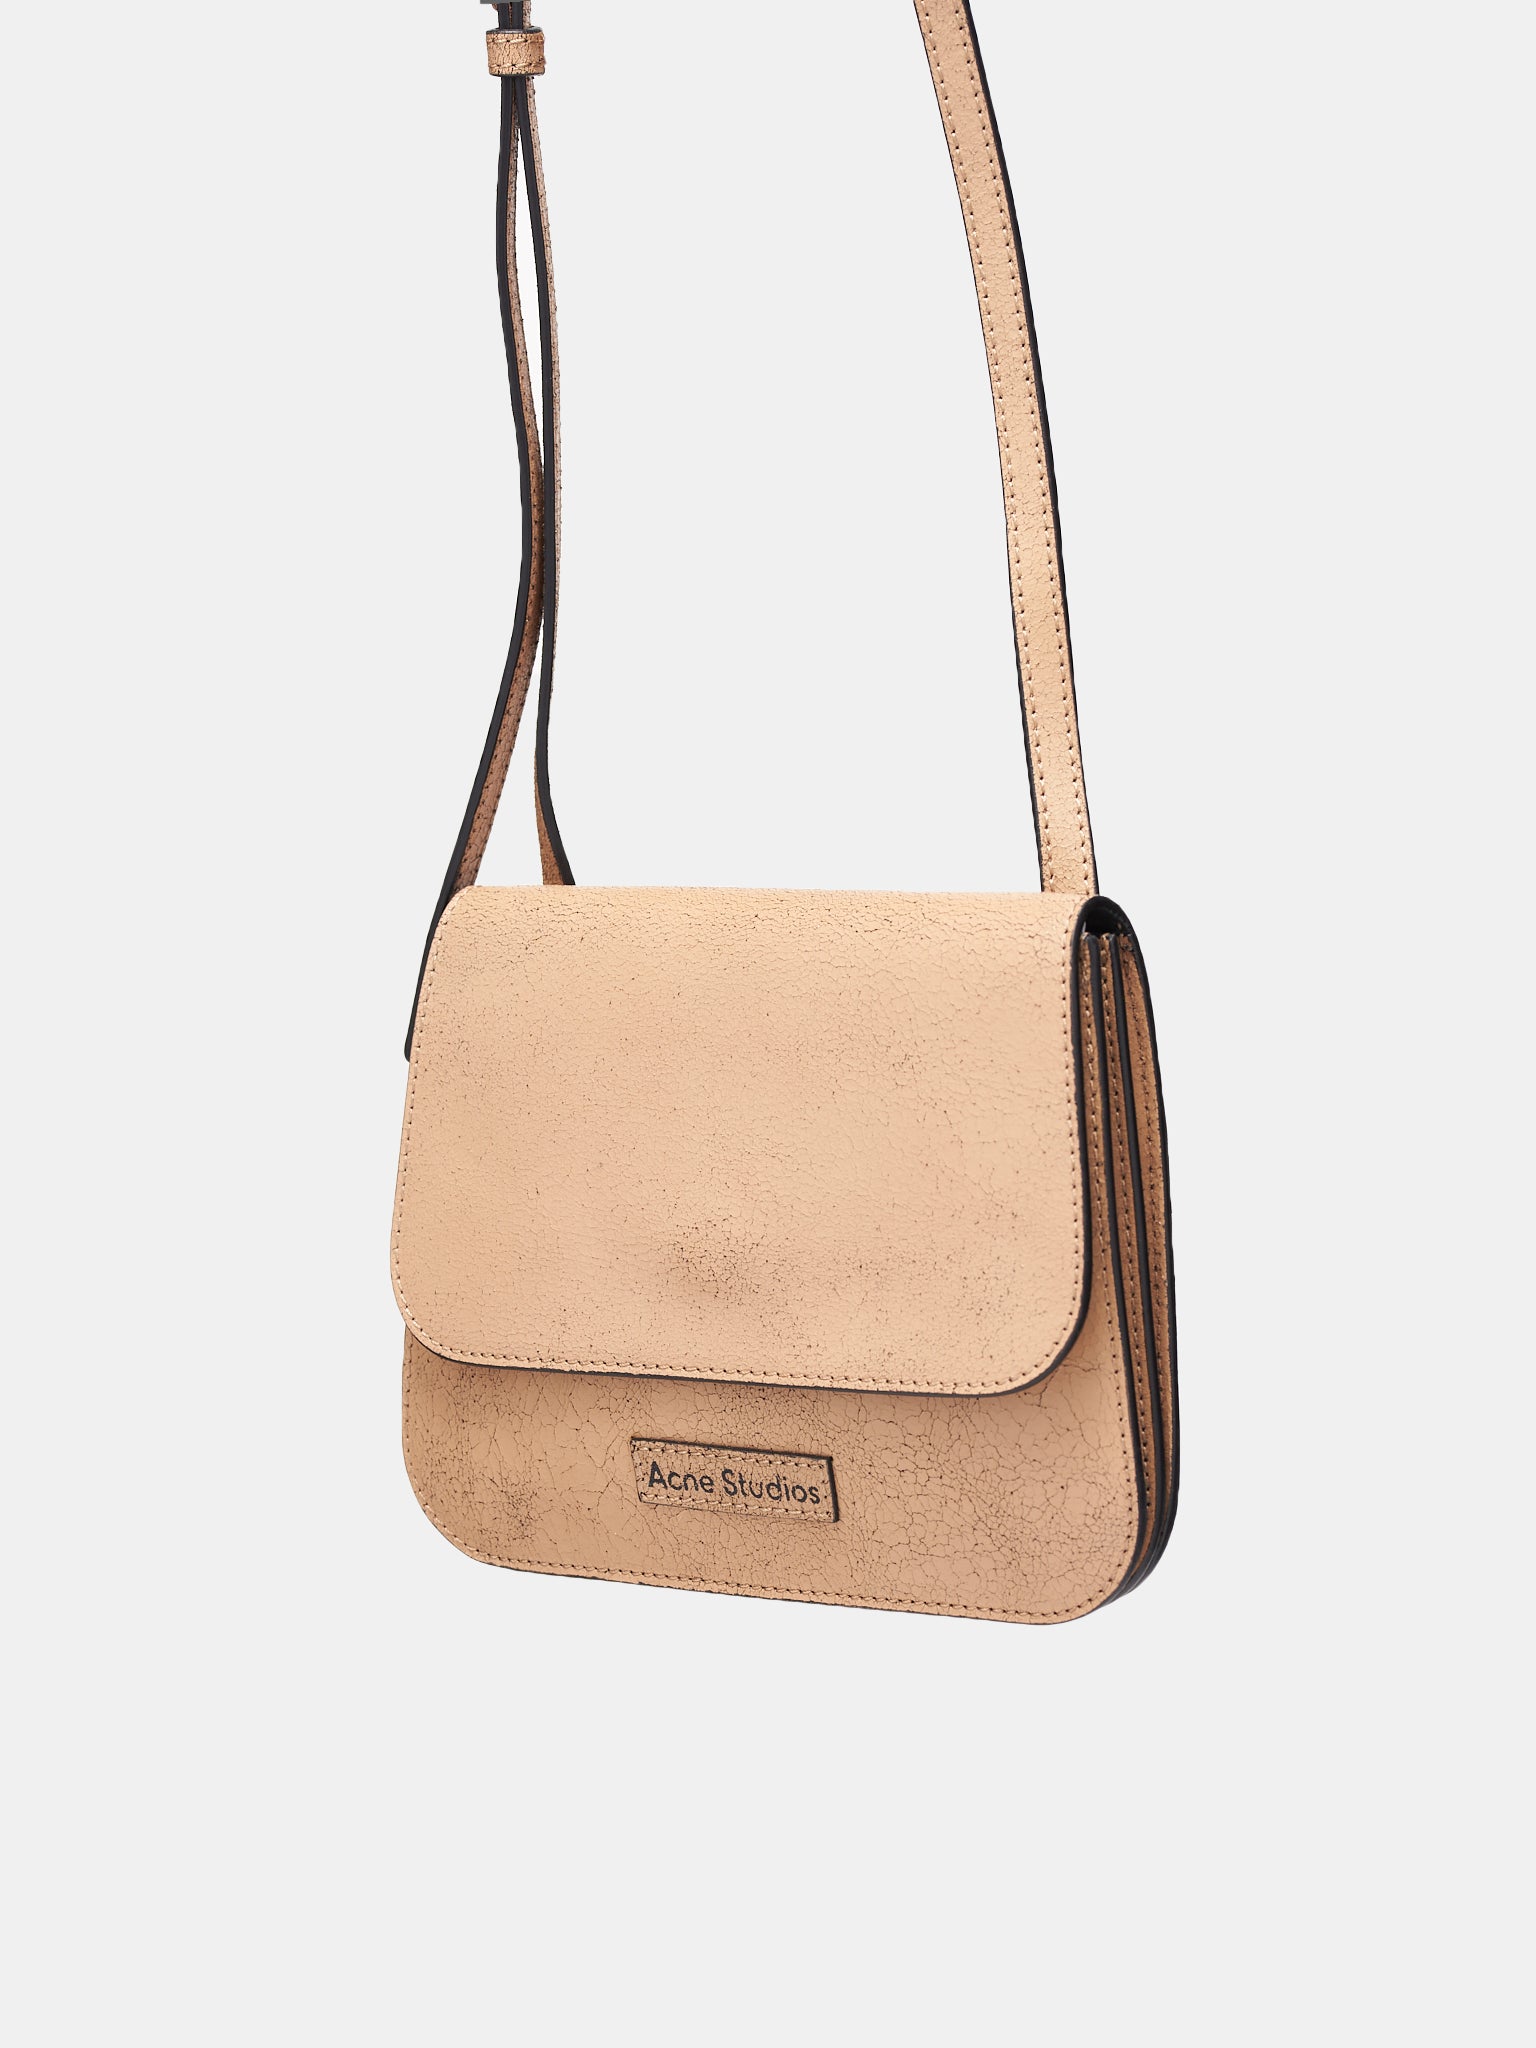 CLN leather hand/ sling bag